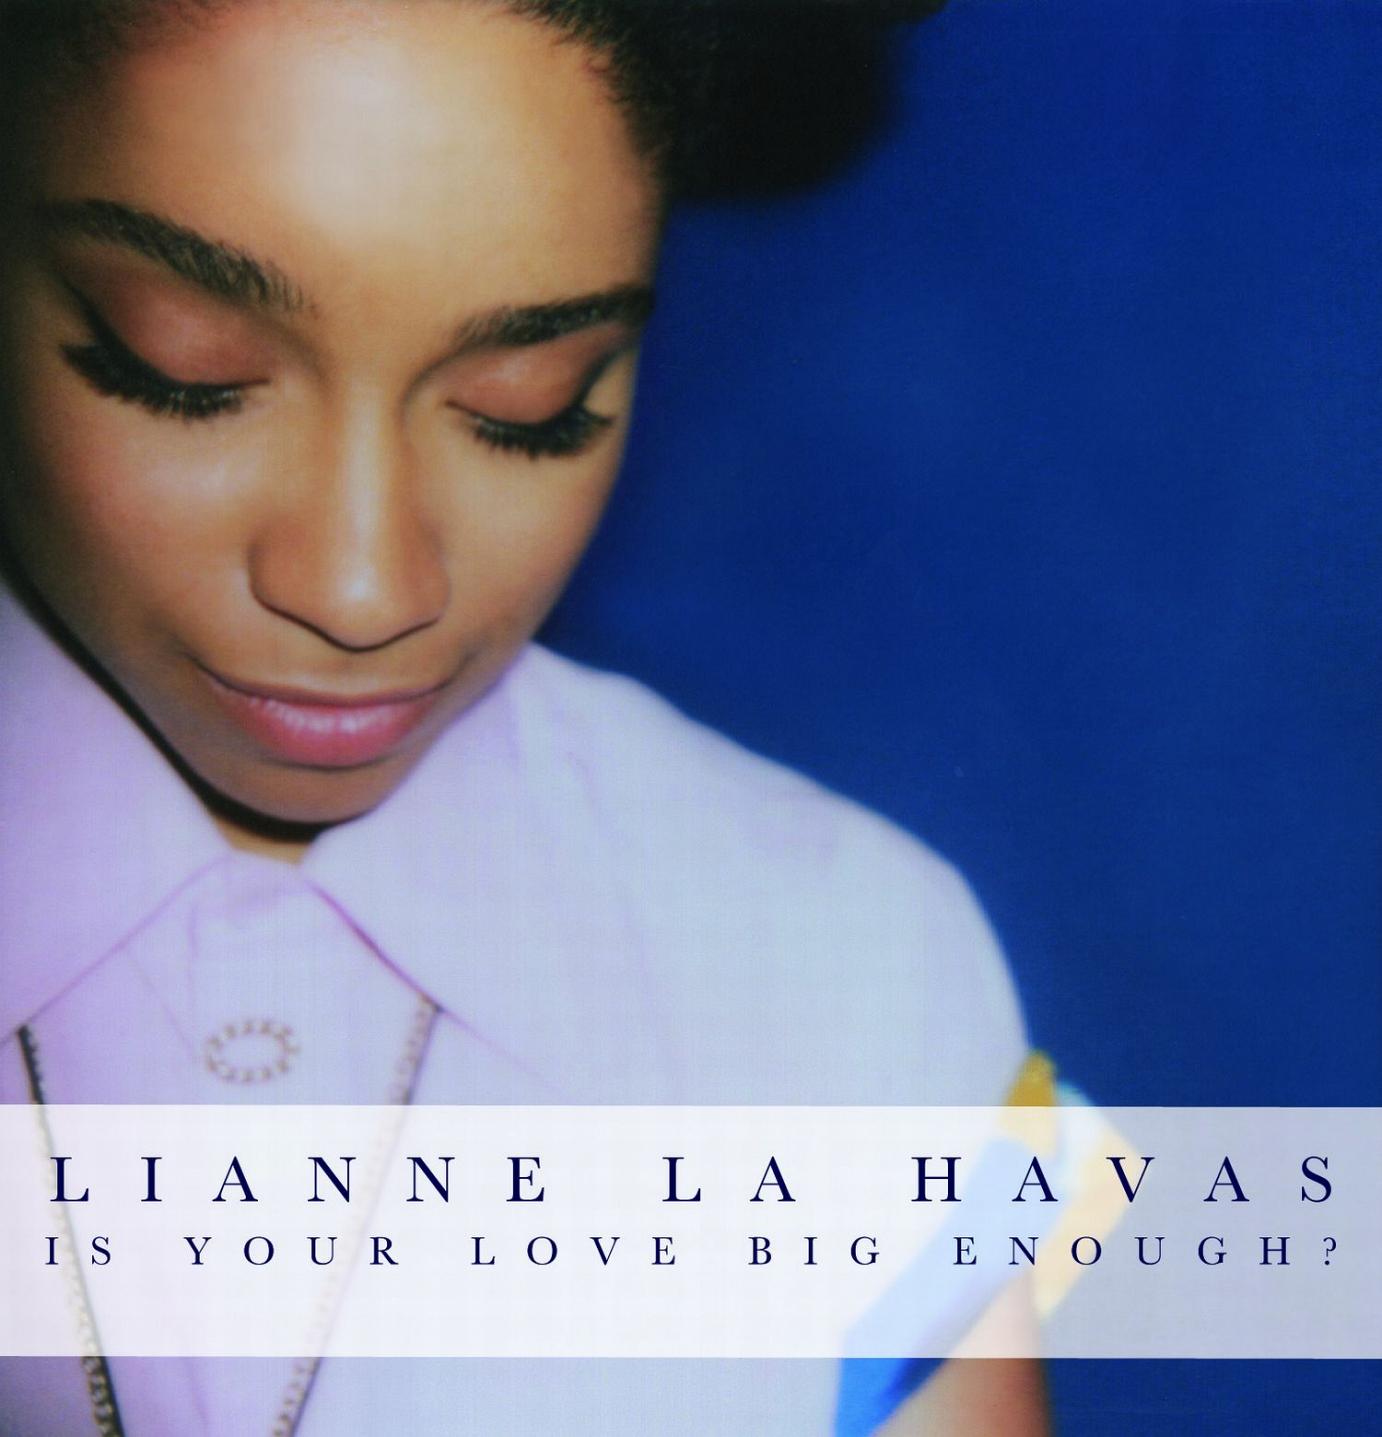 Lianne La Havas – Große Liebe und alte Seele: “Is Your Love Big Enough?”